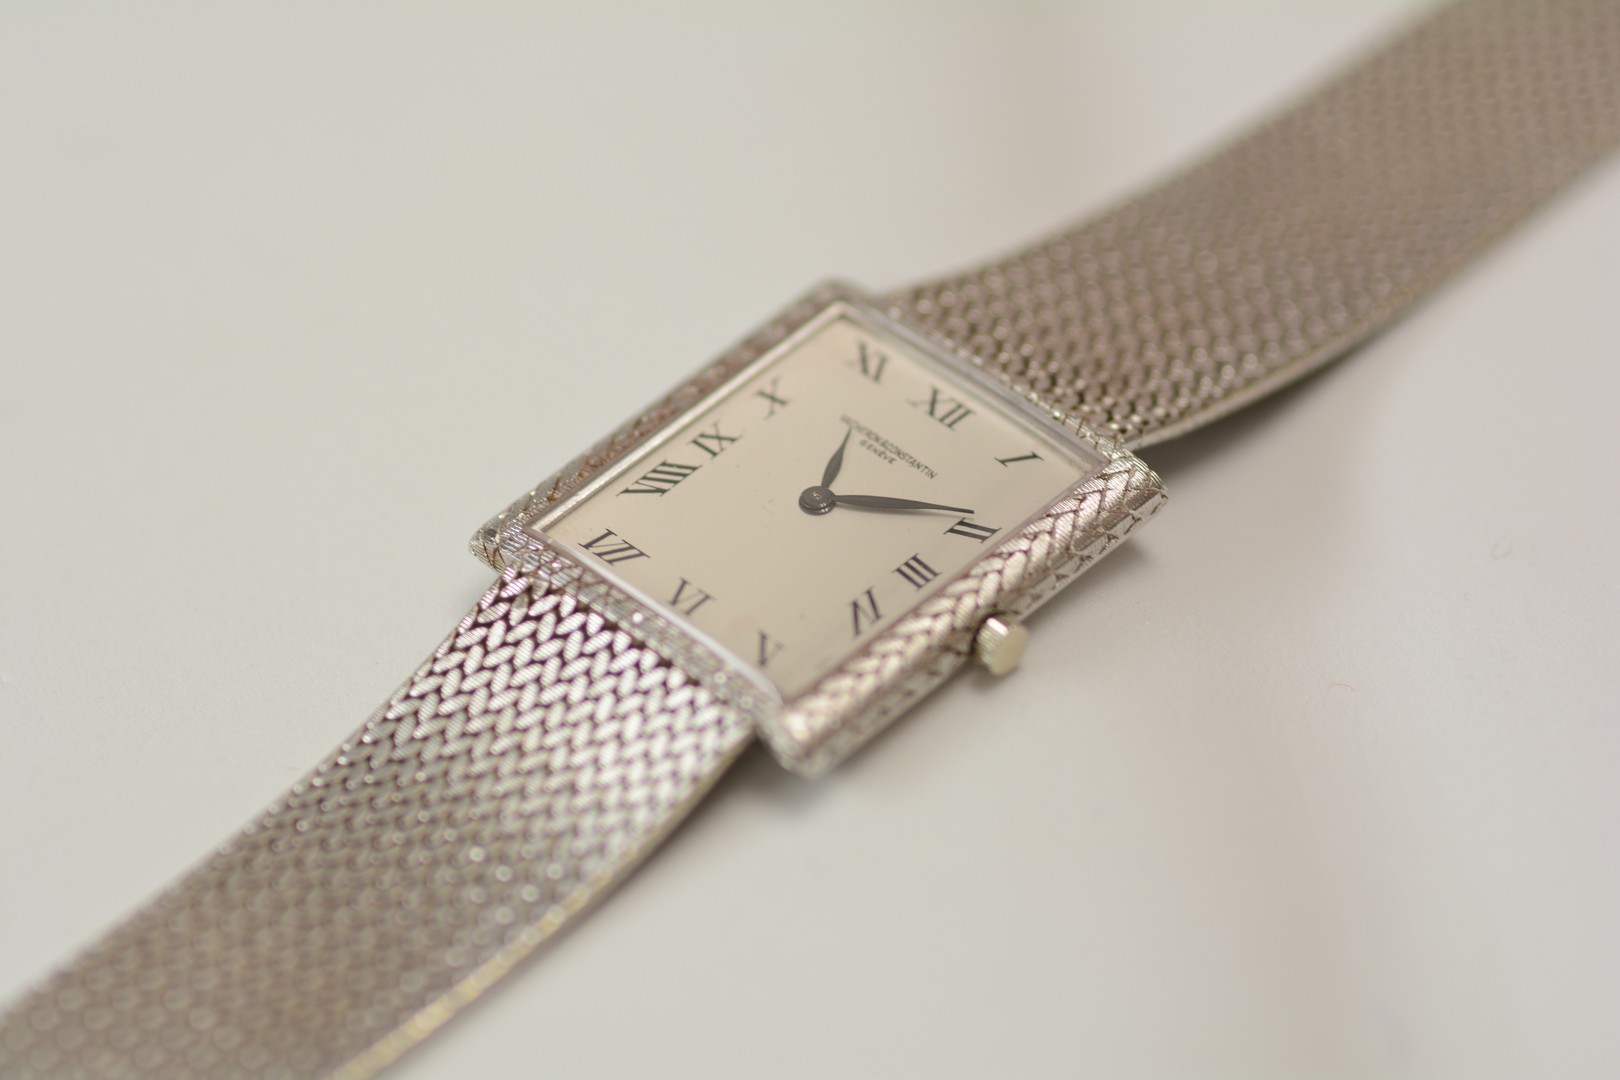 Vacheron Constantin / Rectangular - Ultra thin - 1960s - Unisex White gold Wrist Watch - Image 11 of 12